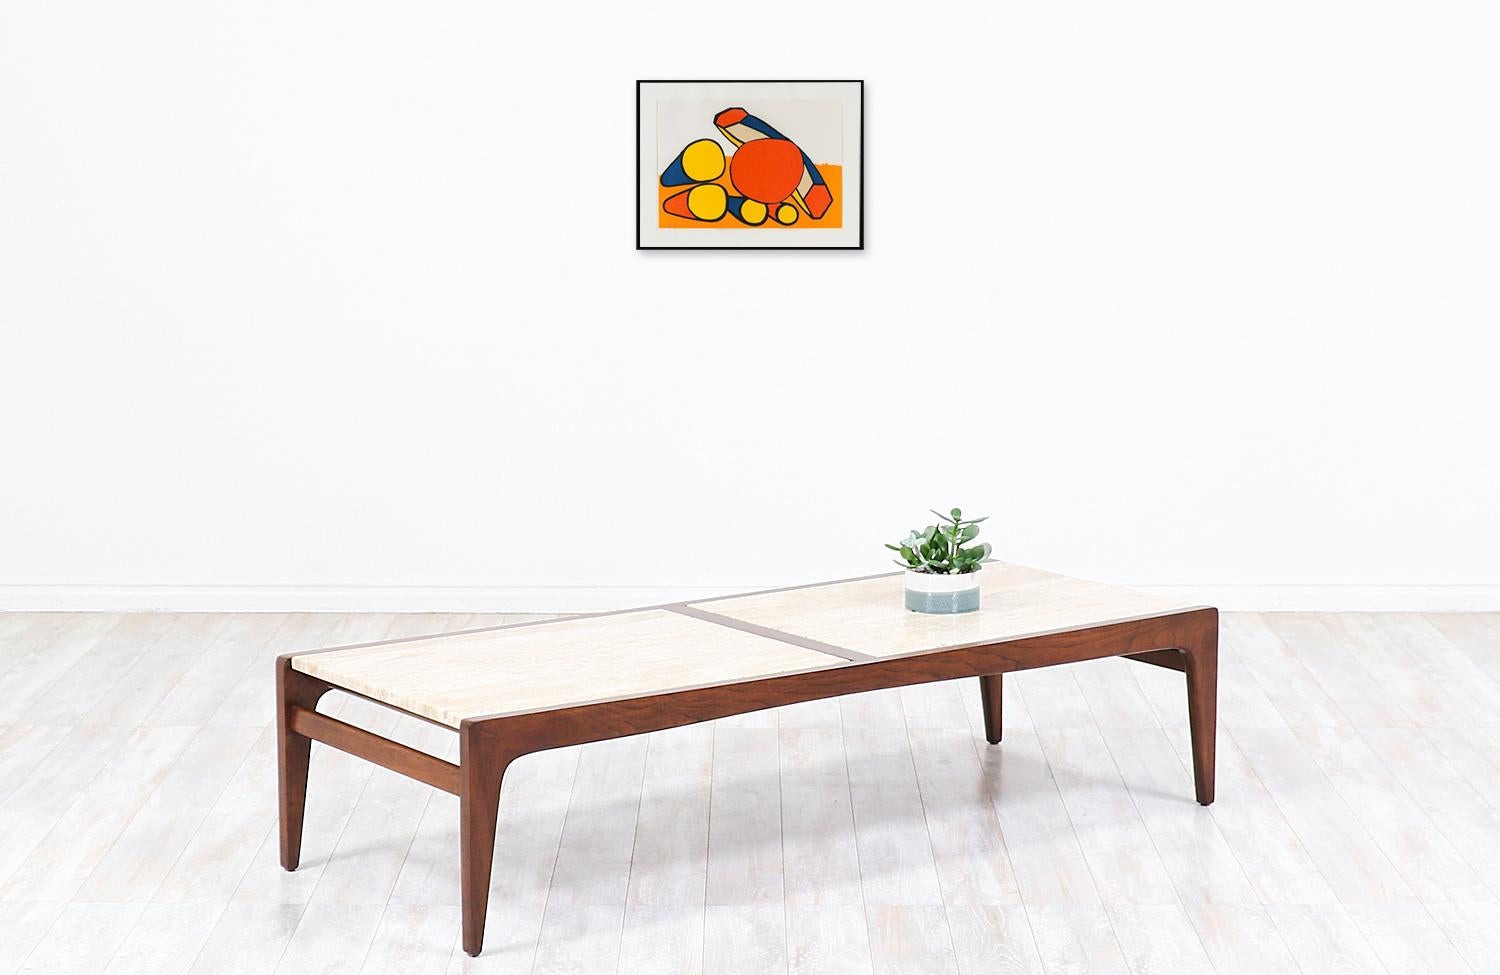 A stunning modern coffee table designed by John Van Koert in collaboration for Drexel's 